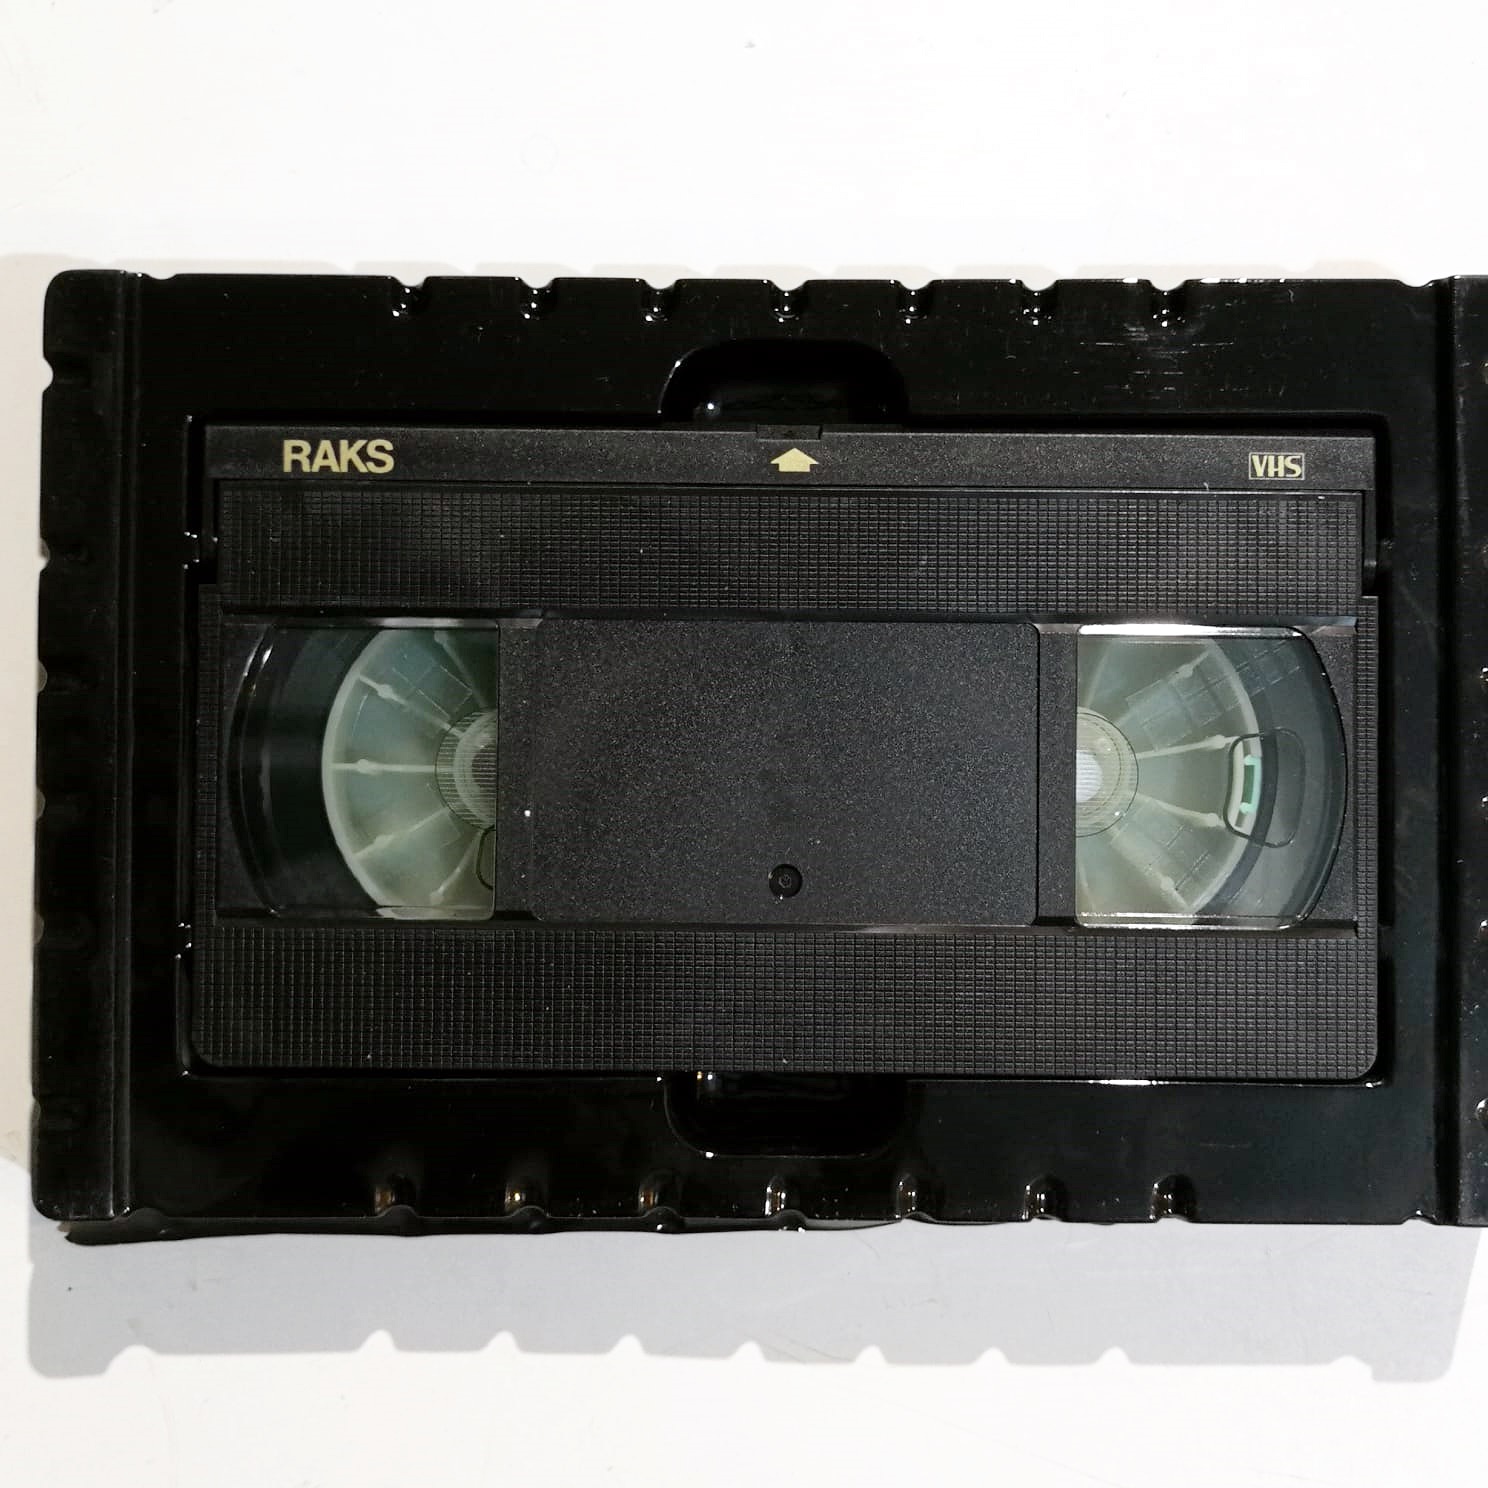 SHOTS No.11 - The Creative Video Programme - VHS Kaset